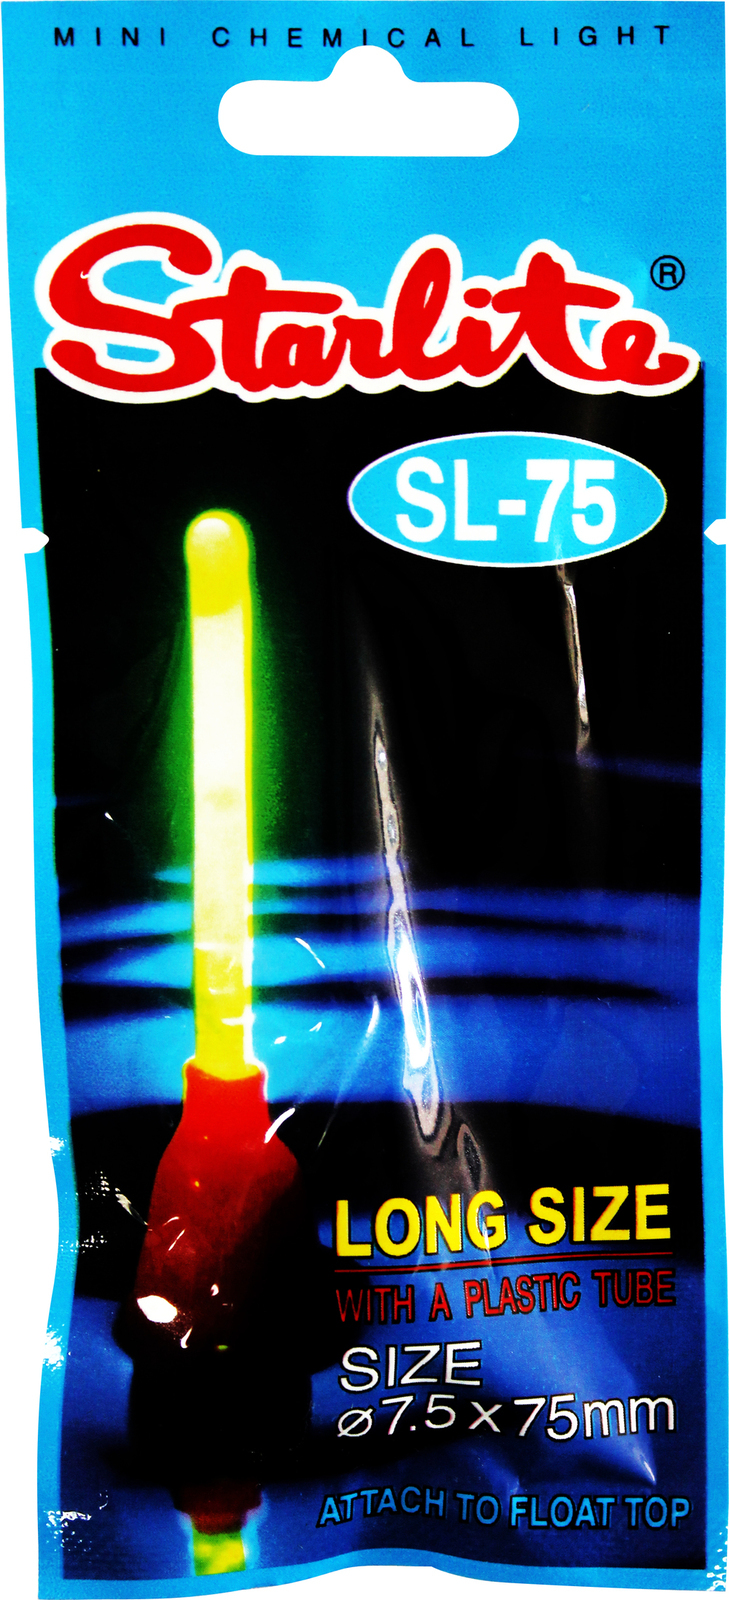 75mm Starlite Chemical Fishing Light with Tube - SL-75 Fluoro Glow